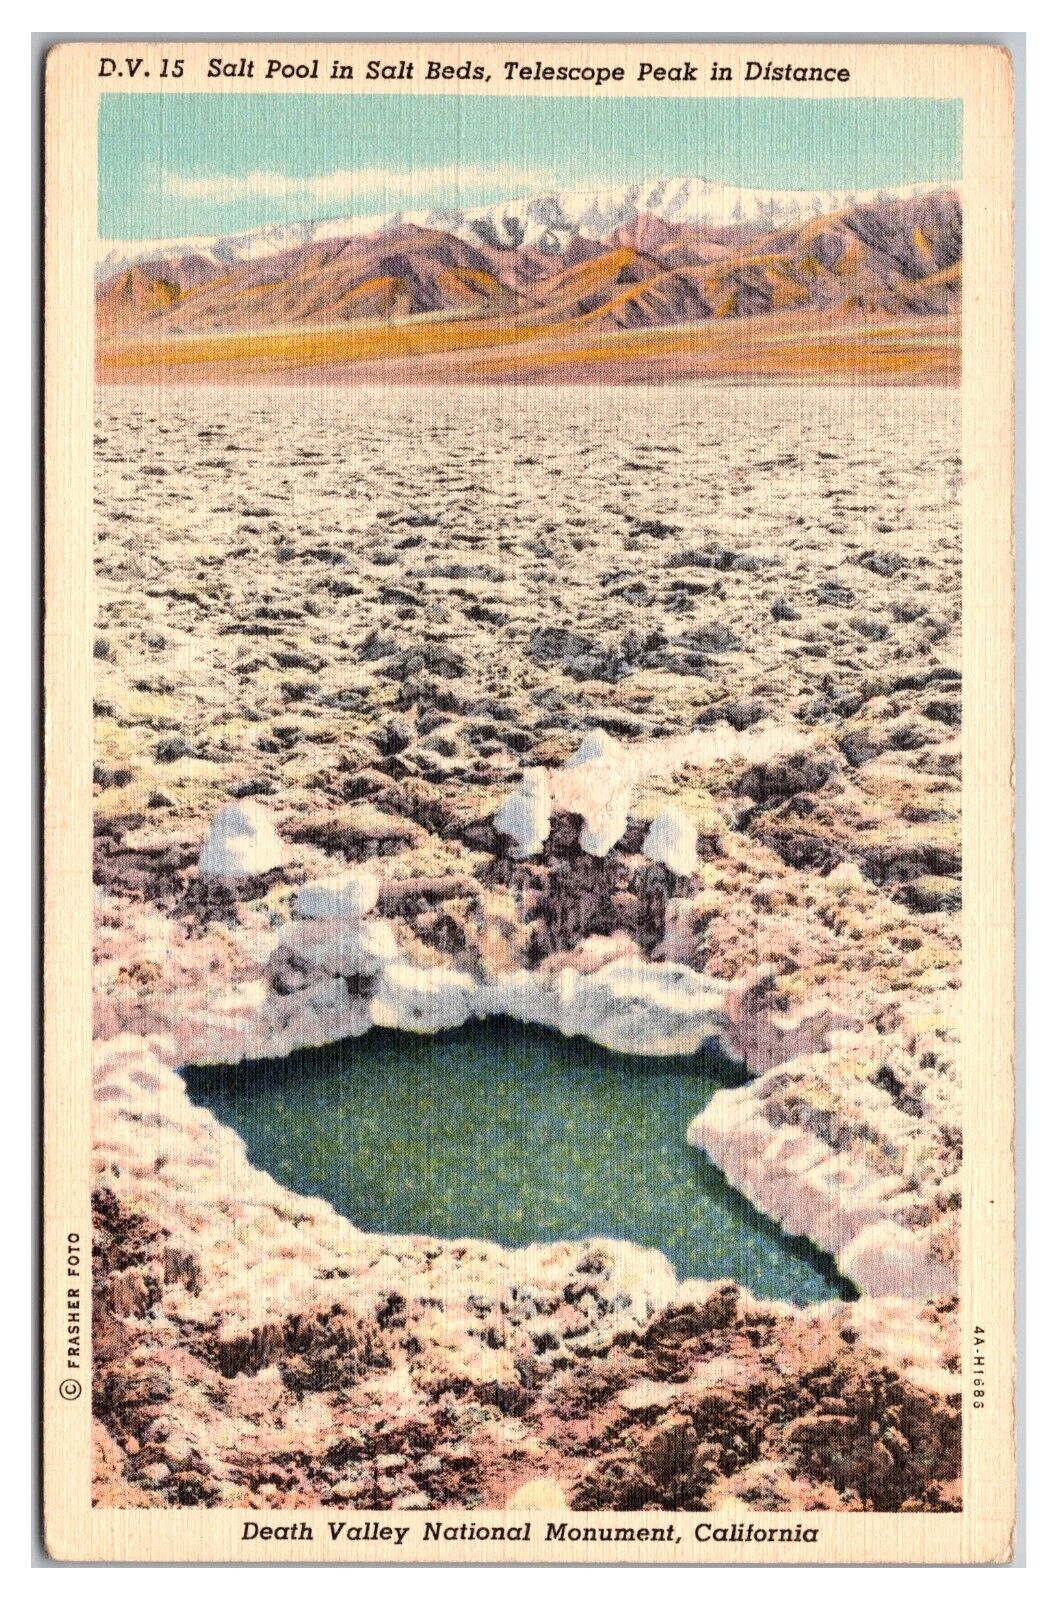 Salt Pool In Salt Beds, Telescope Peak In Distance, Death Valley